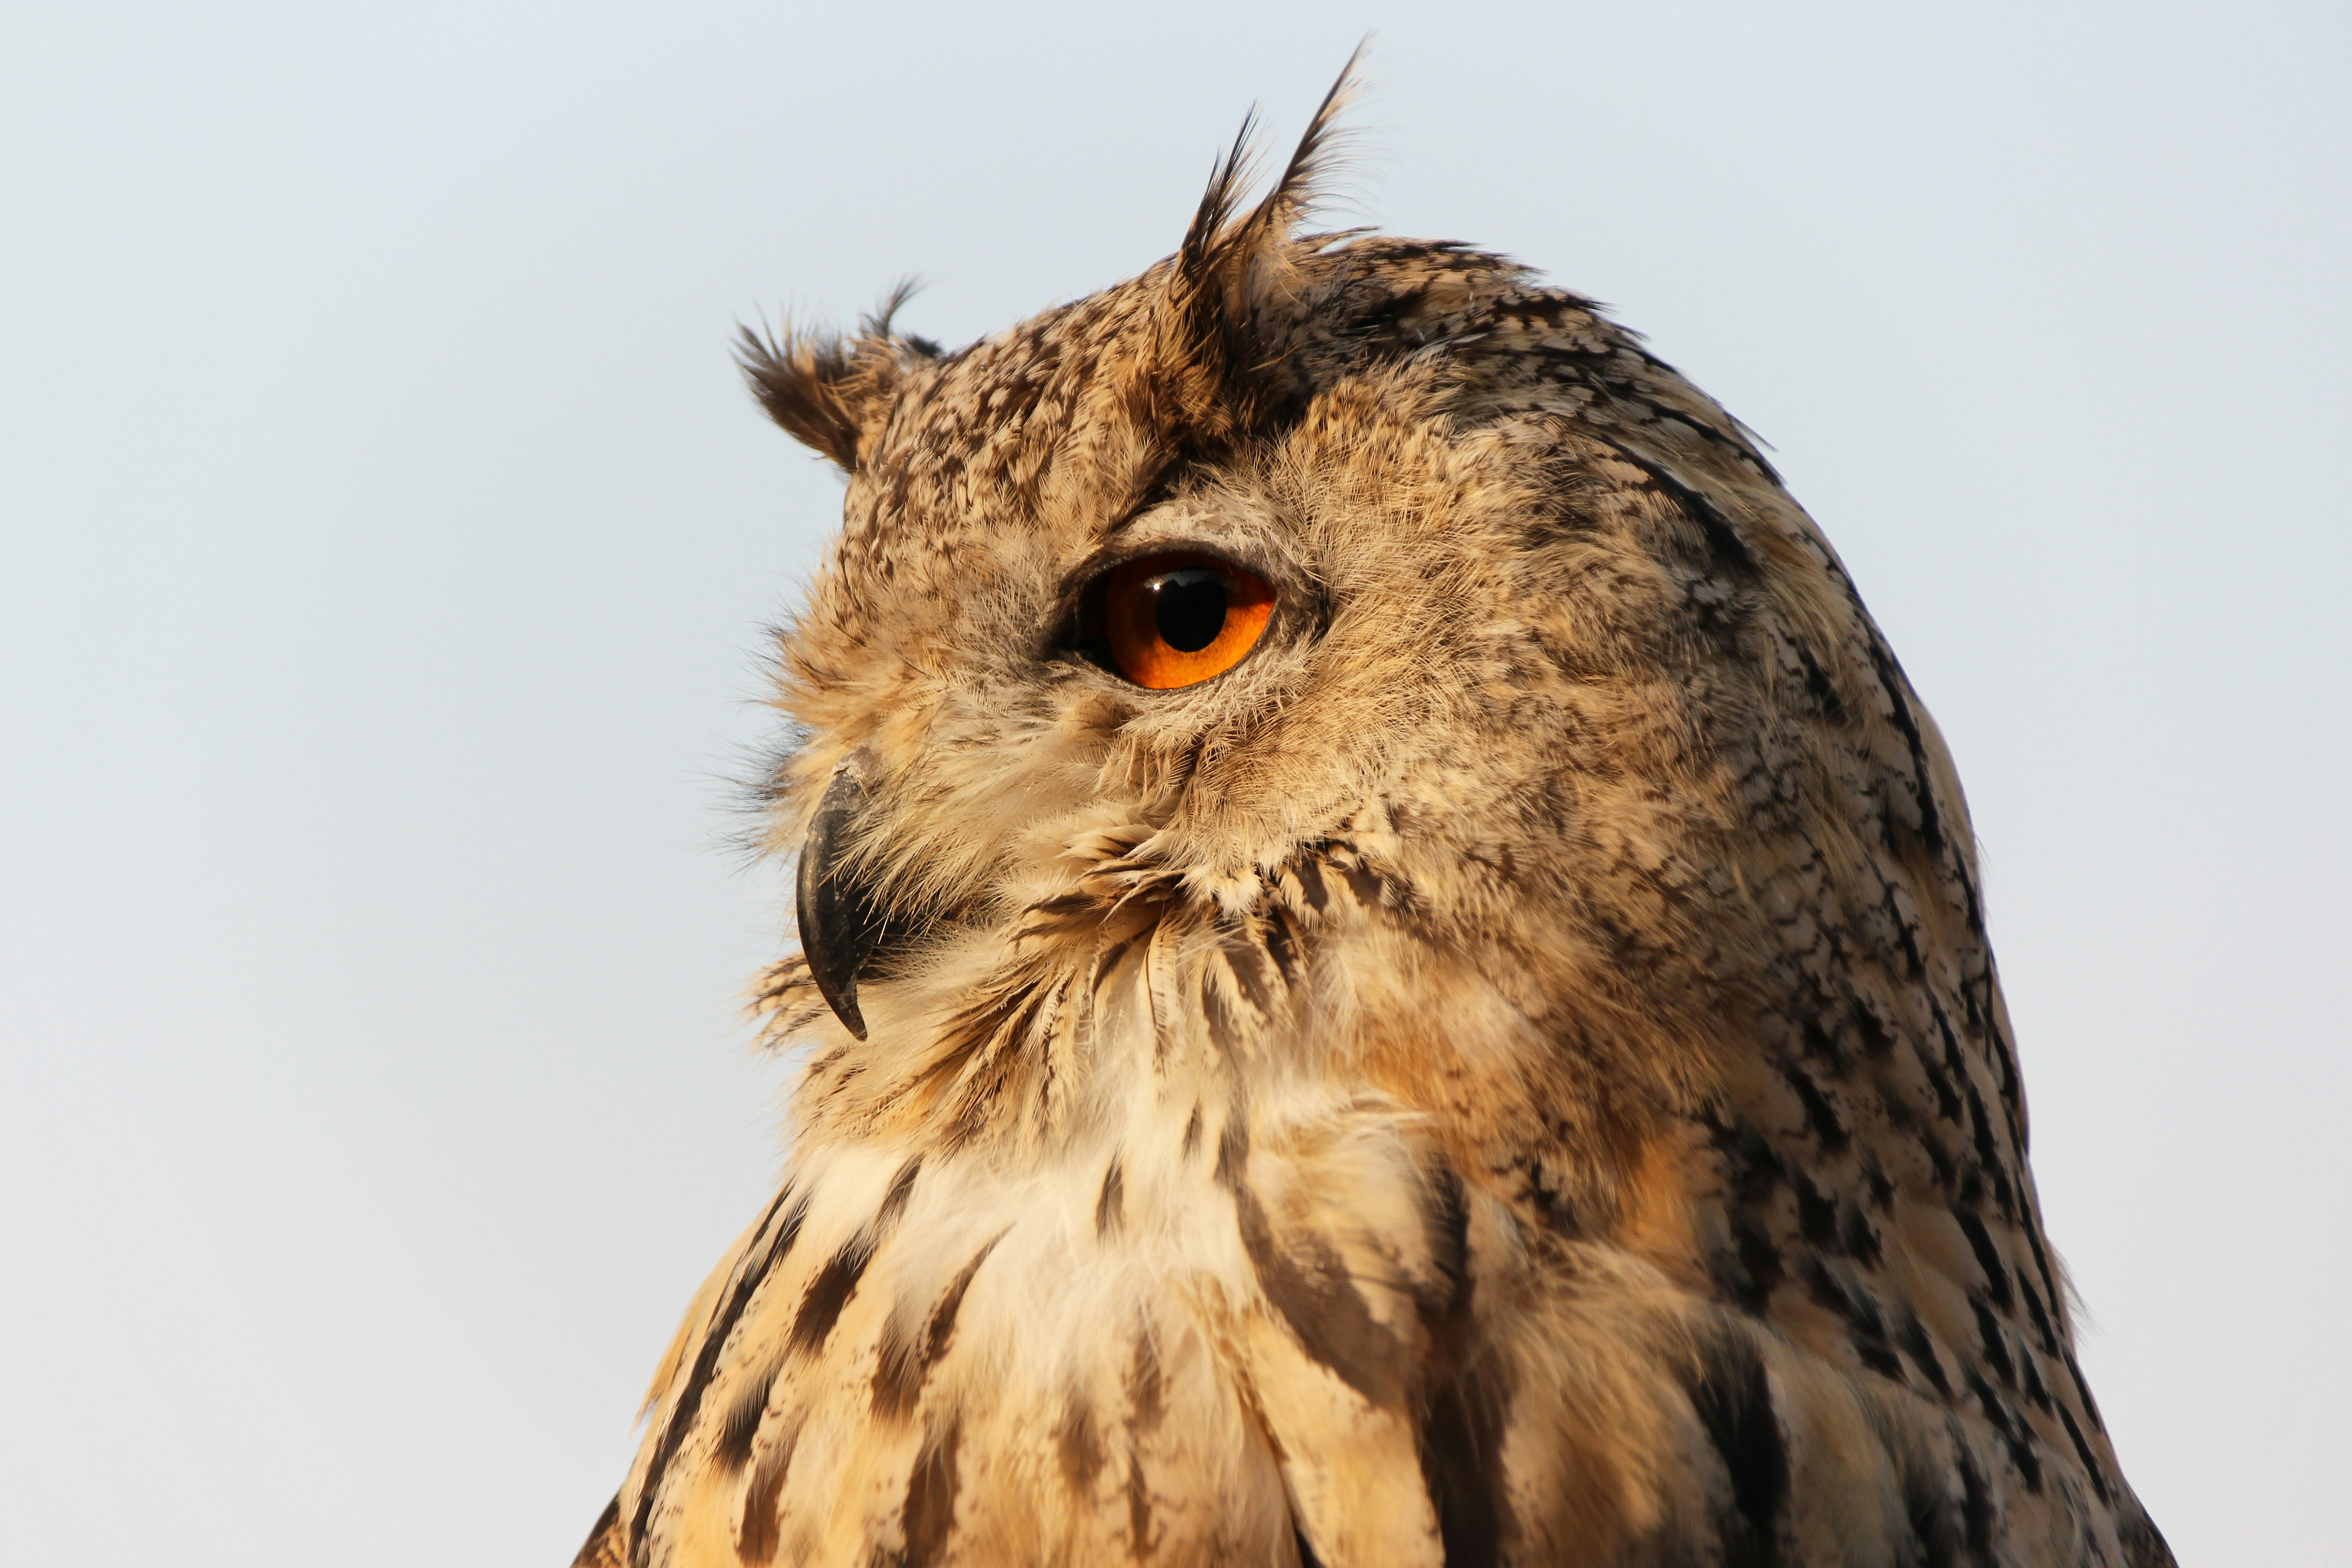  A closeup of a trained owl.